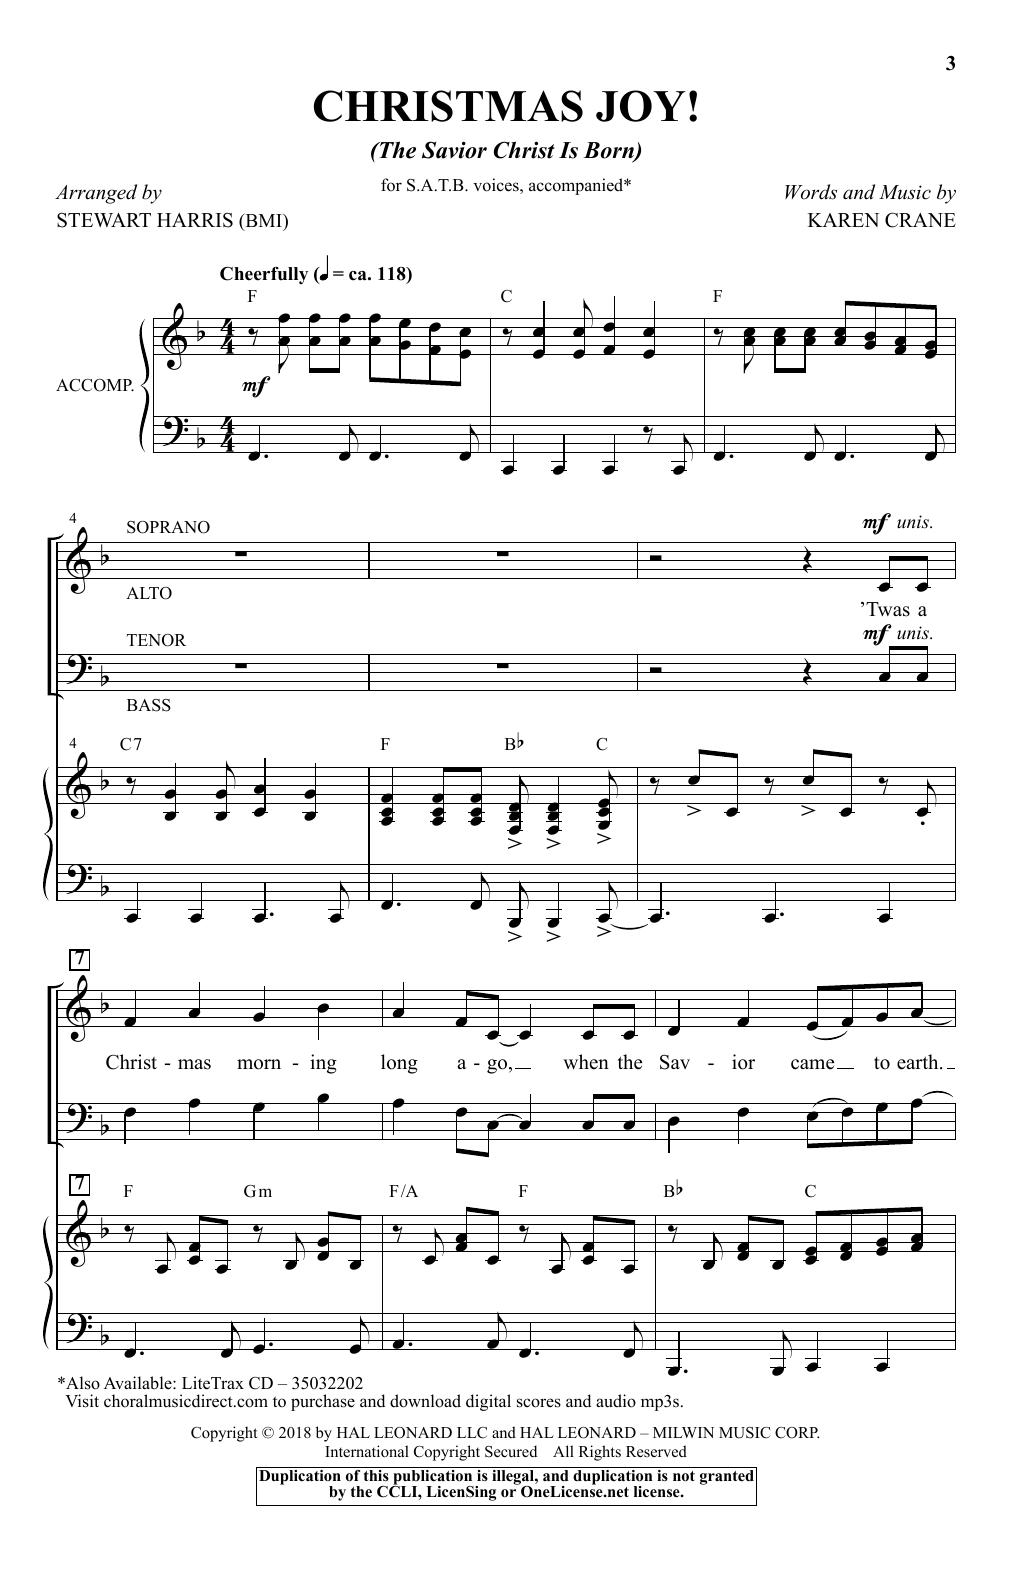 Karen Crane Christmas Joy! (The Savior Christ Is Born) (arr. Stewart Harris) Sheet Music Notes & Chords for SATB Choir - Download or Print PDF